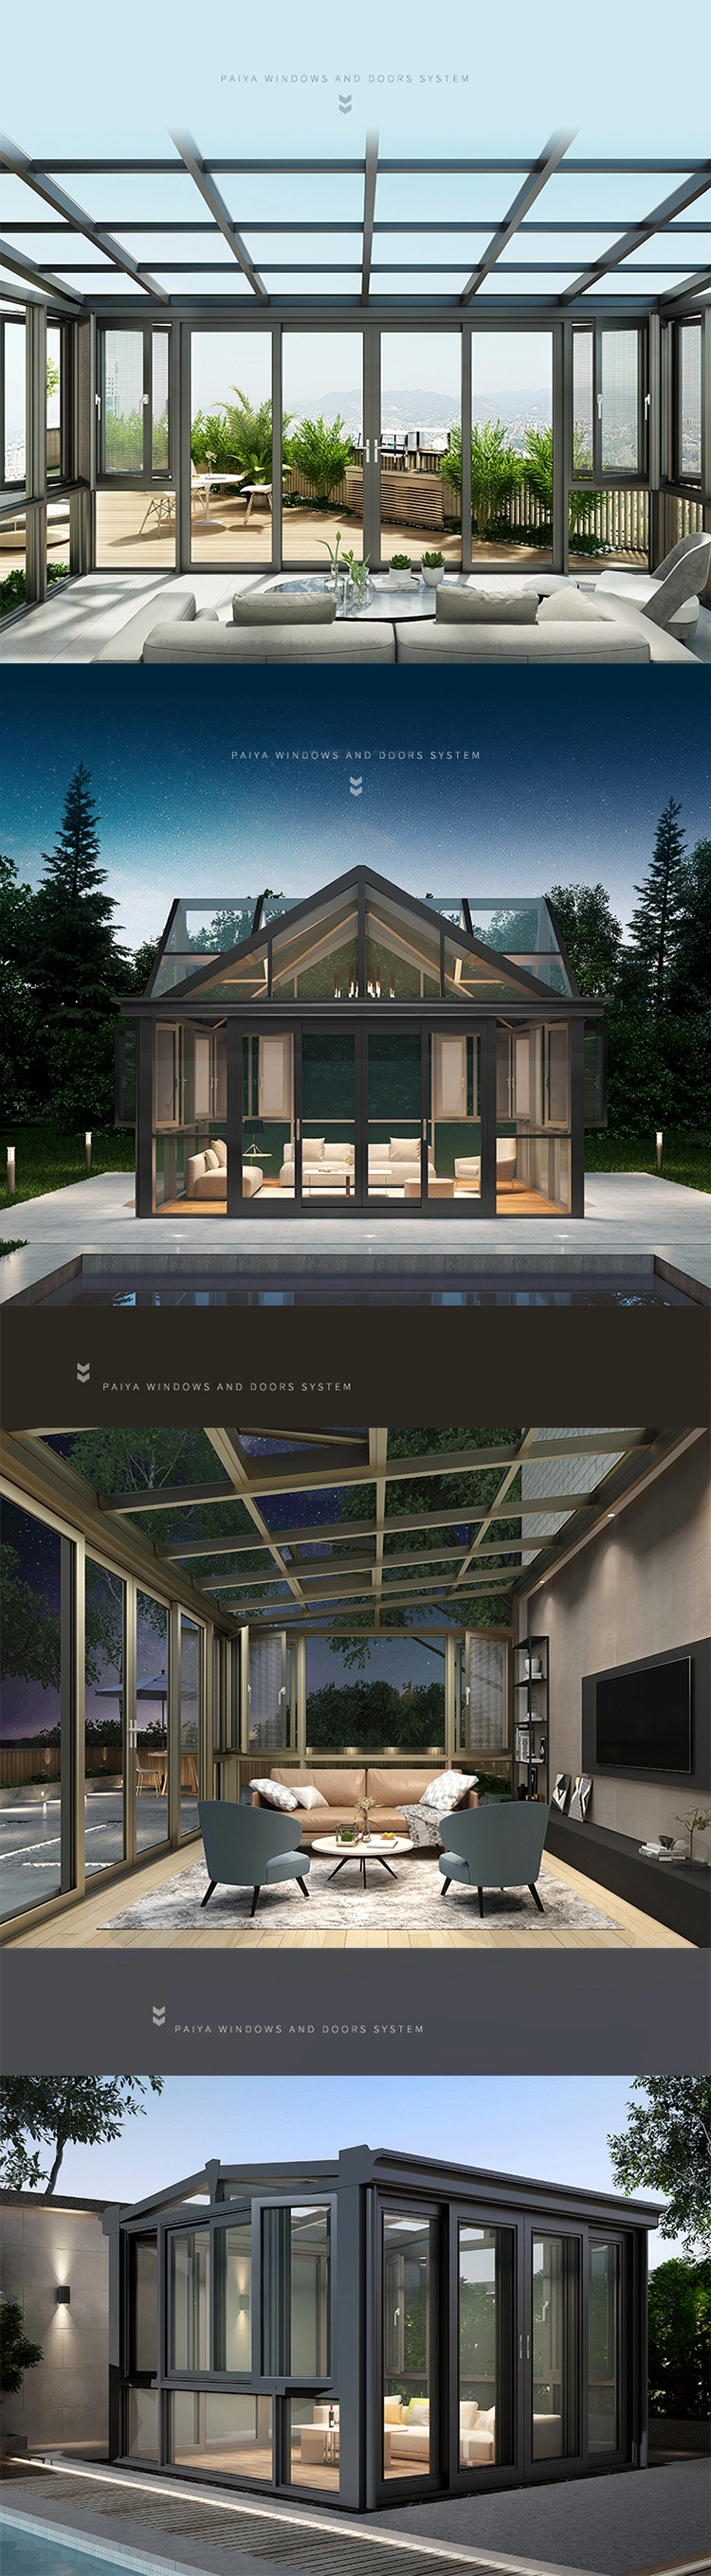 European Style Waterproof Heat Insulation Temper Glass Triangle Roof Garden Aluminum Prefab Sun Room